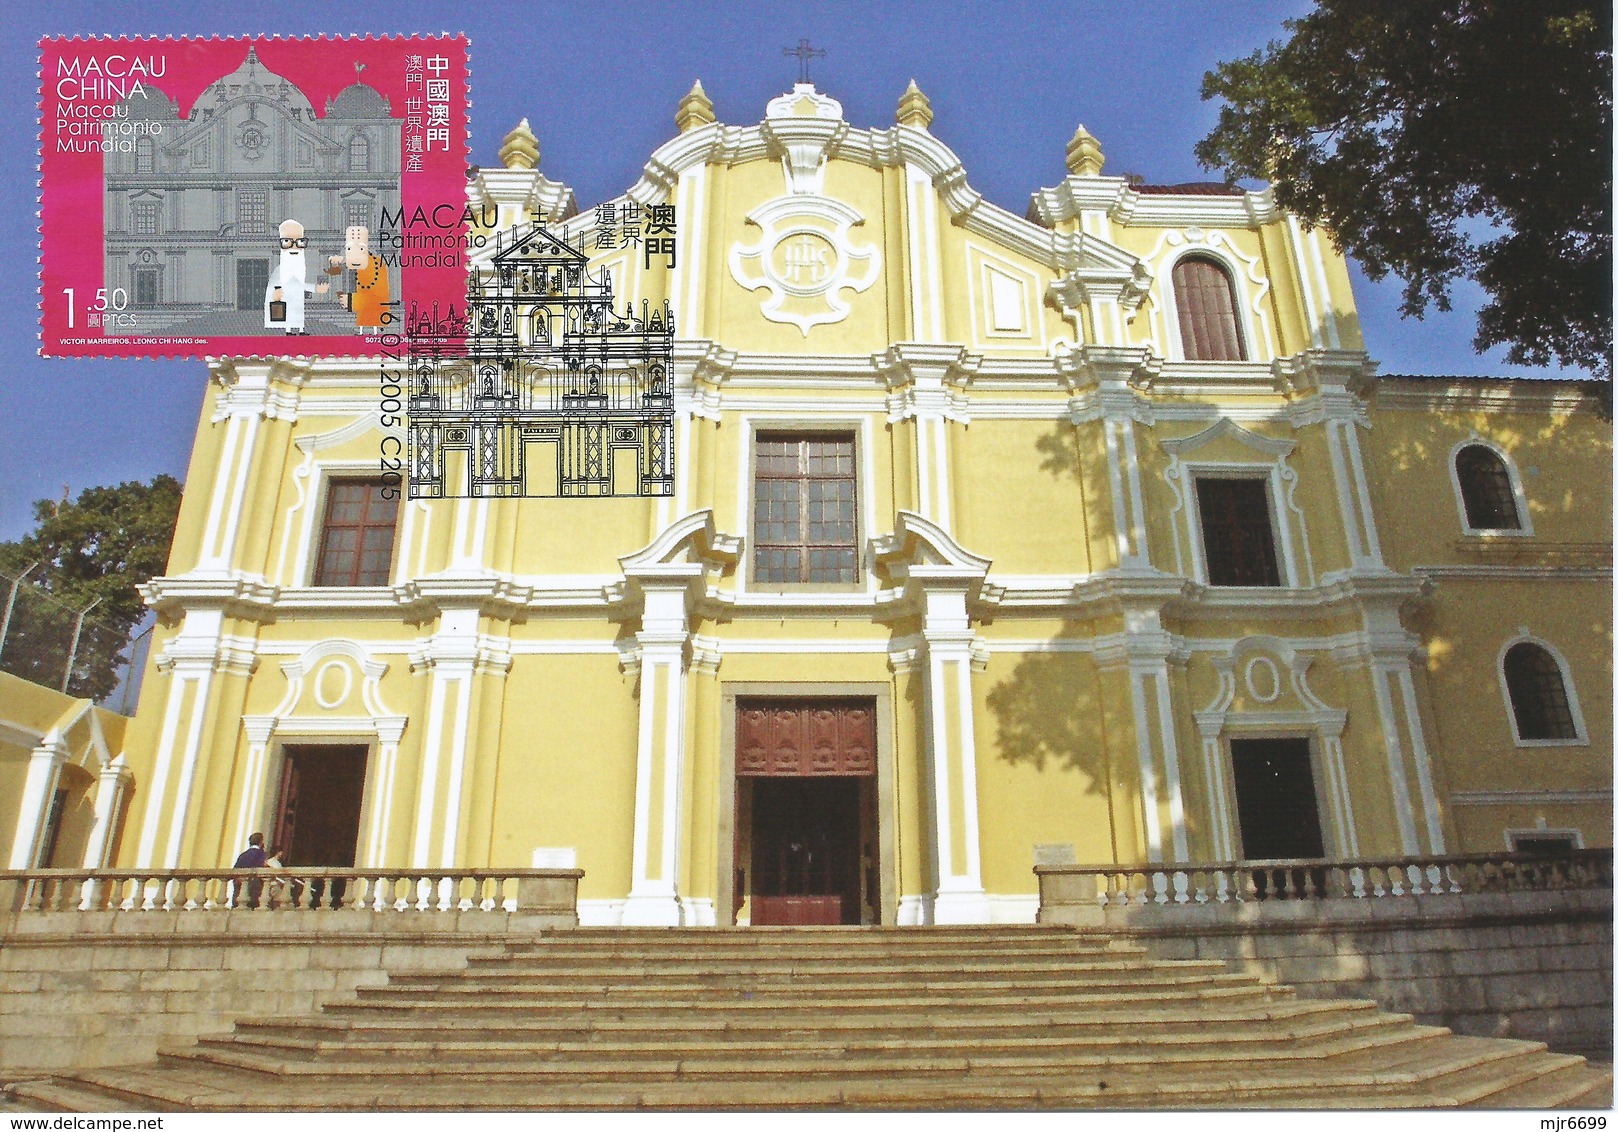 MACAU DOM PEDRO V THEATRE, TEMPLE AH MA, ST. JOSEPH CHURCH,MANDARIM HOUSE ALL PRINTED BY MACAO POST MAX POST CARDS - Macao